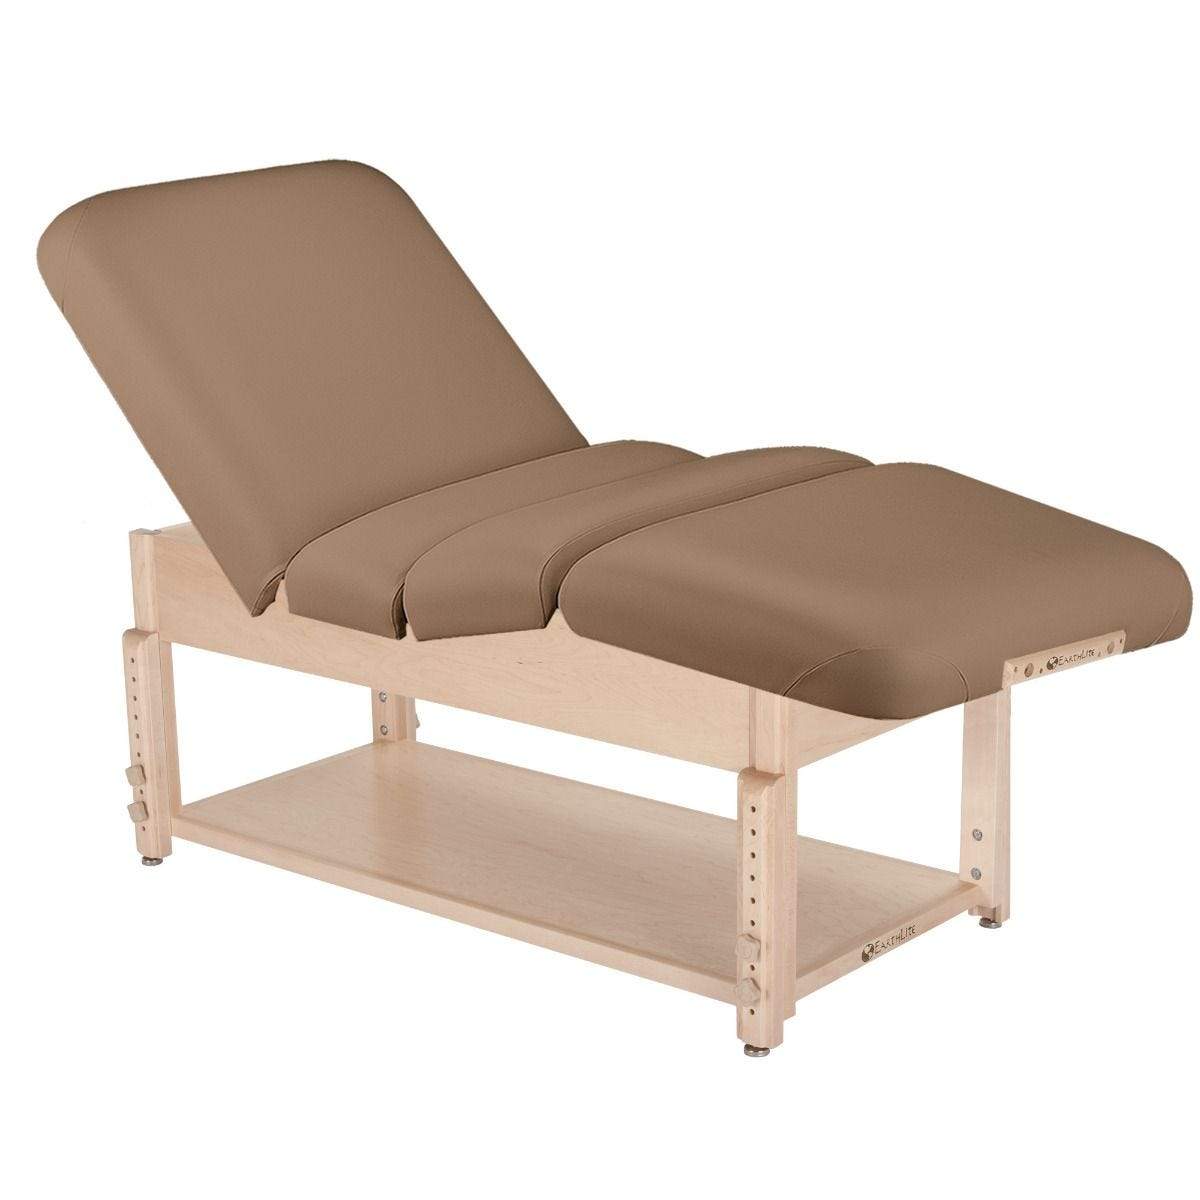 Earthlite Sedona Pneumatic Salon Stationary Spa & Massage Table